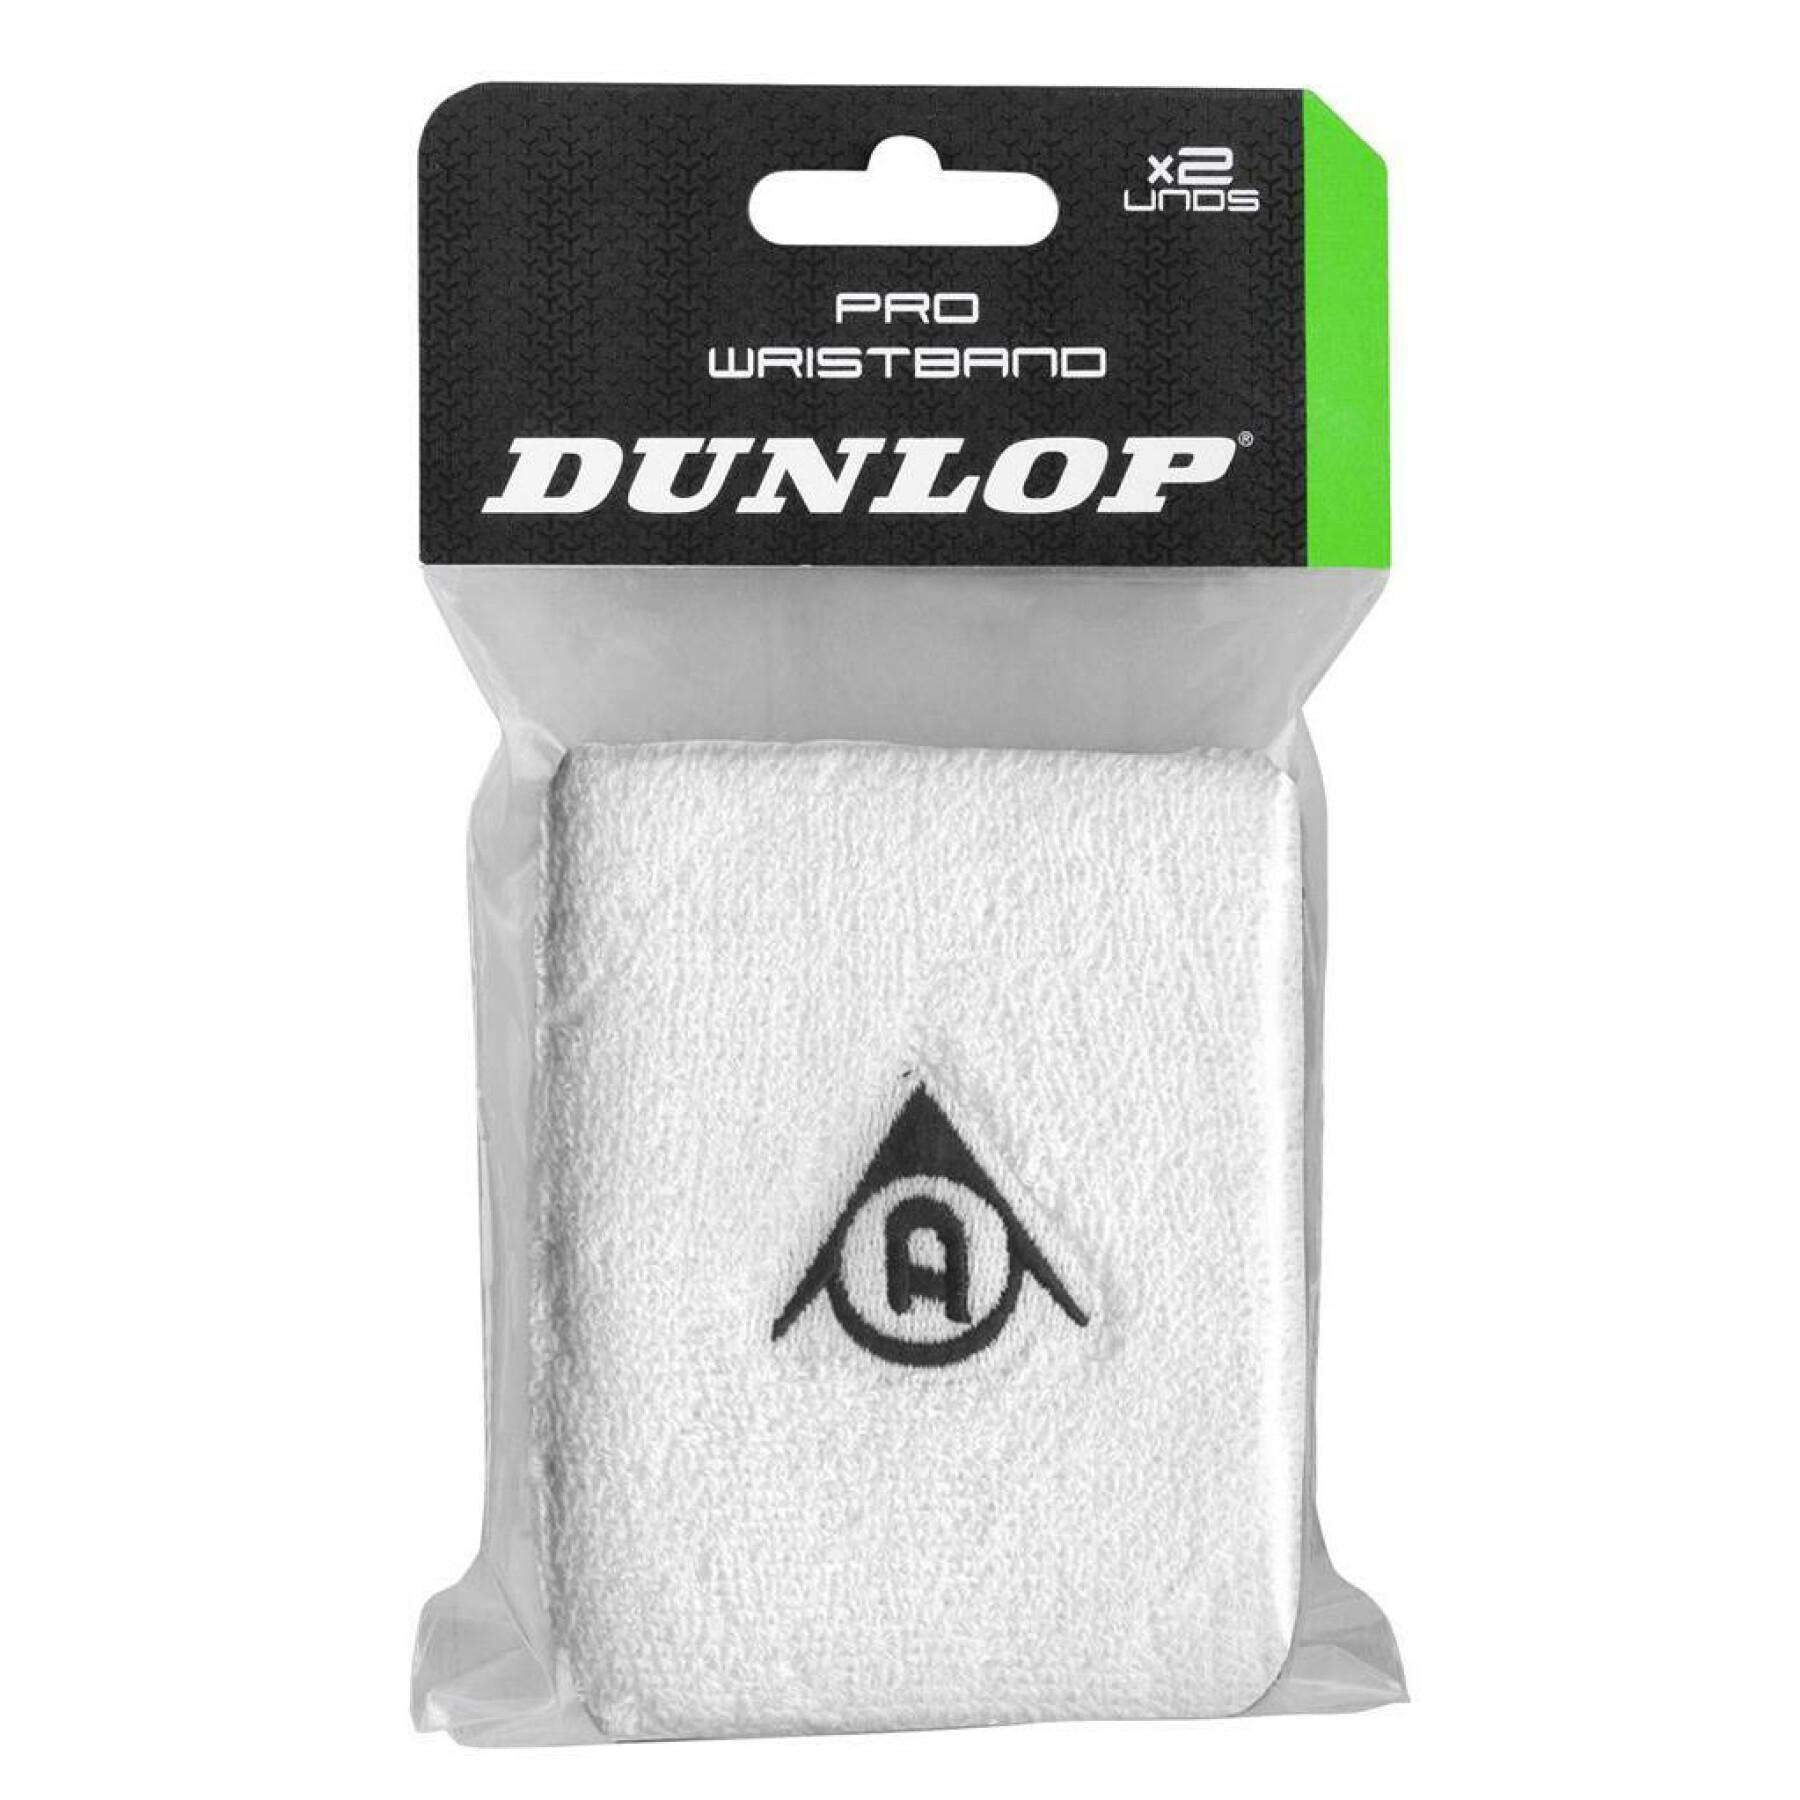 Polso in spugna Dunlop pro 2